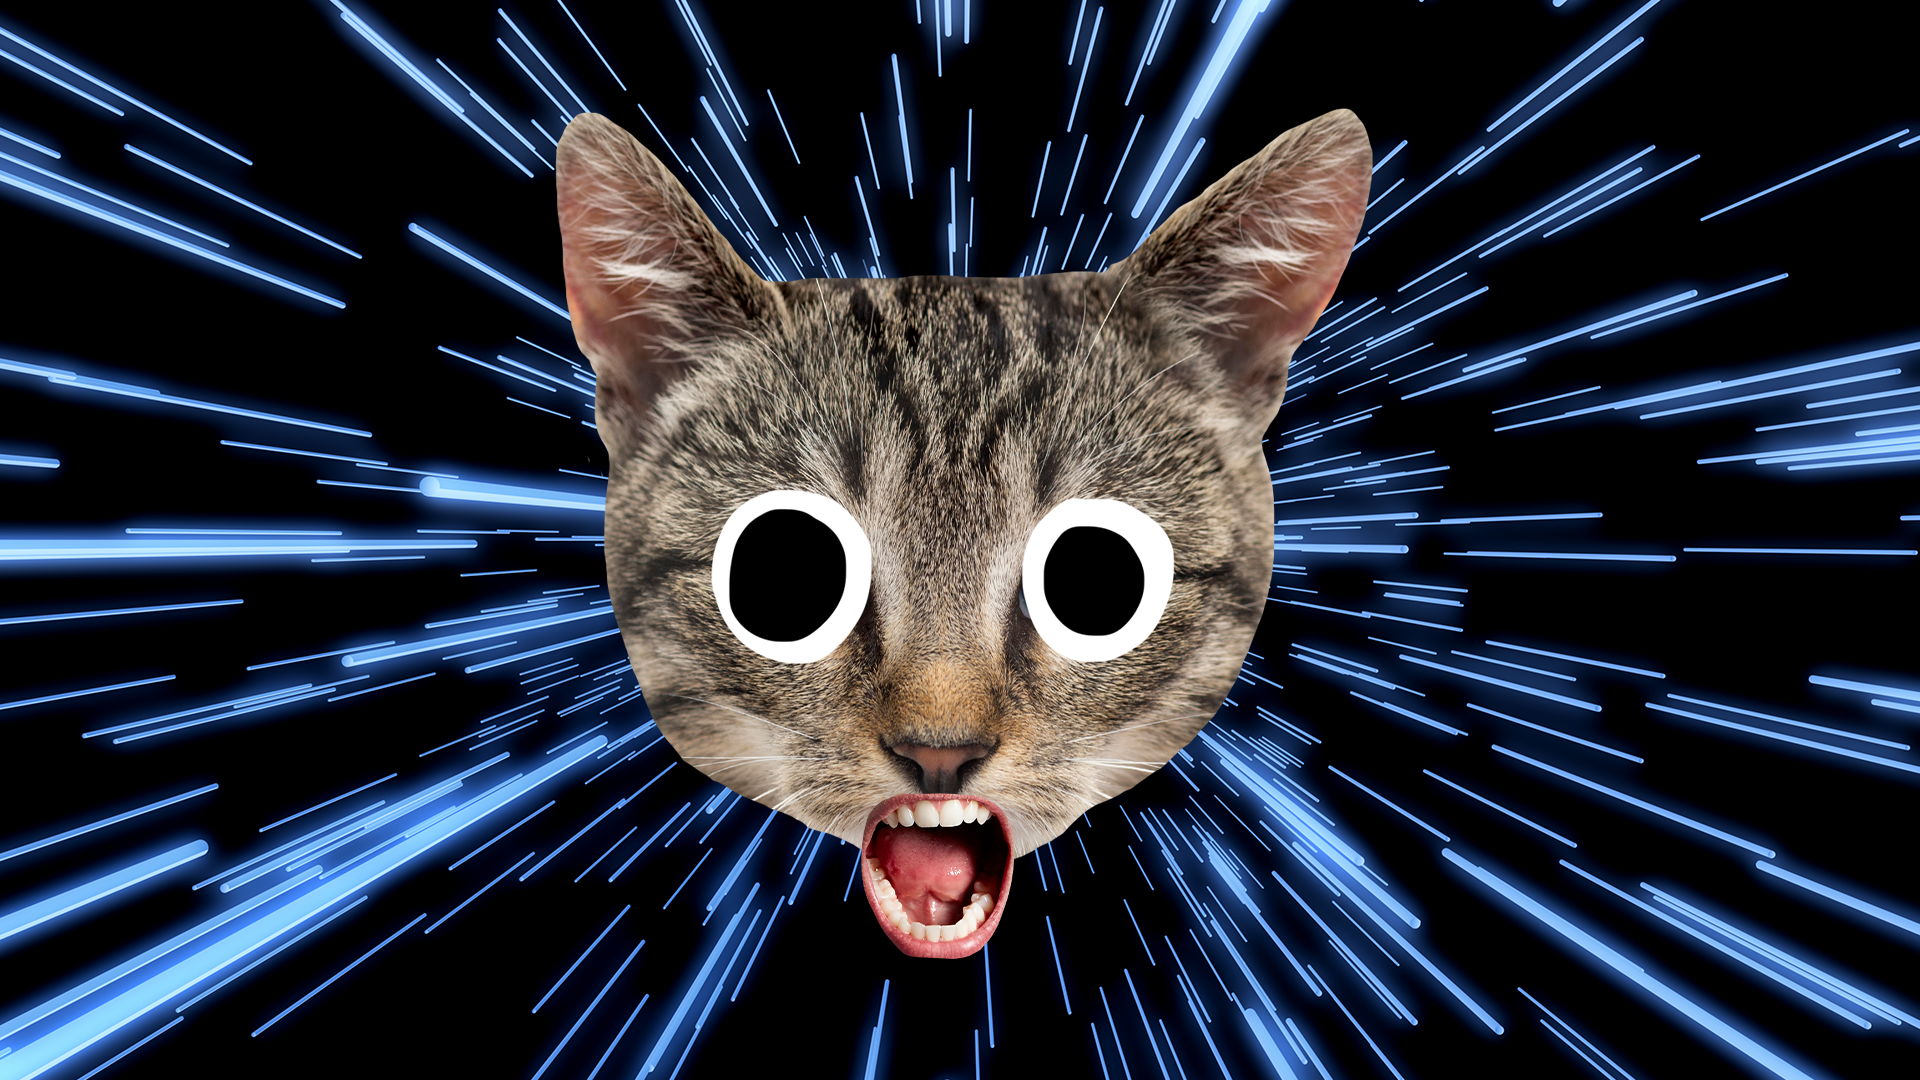 Surprised cat face on laser light background 